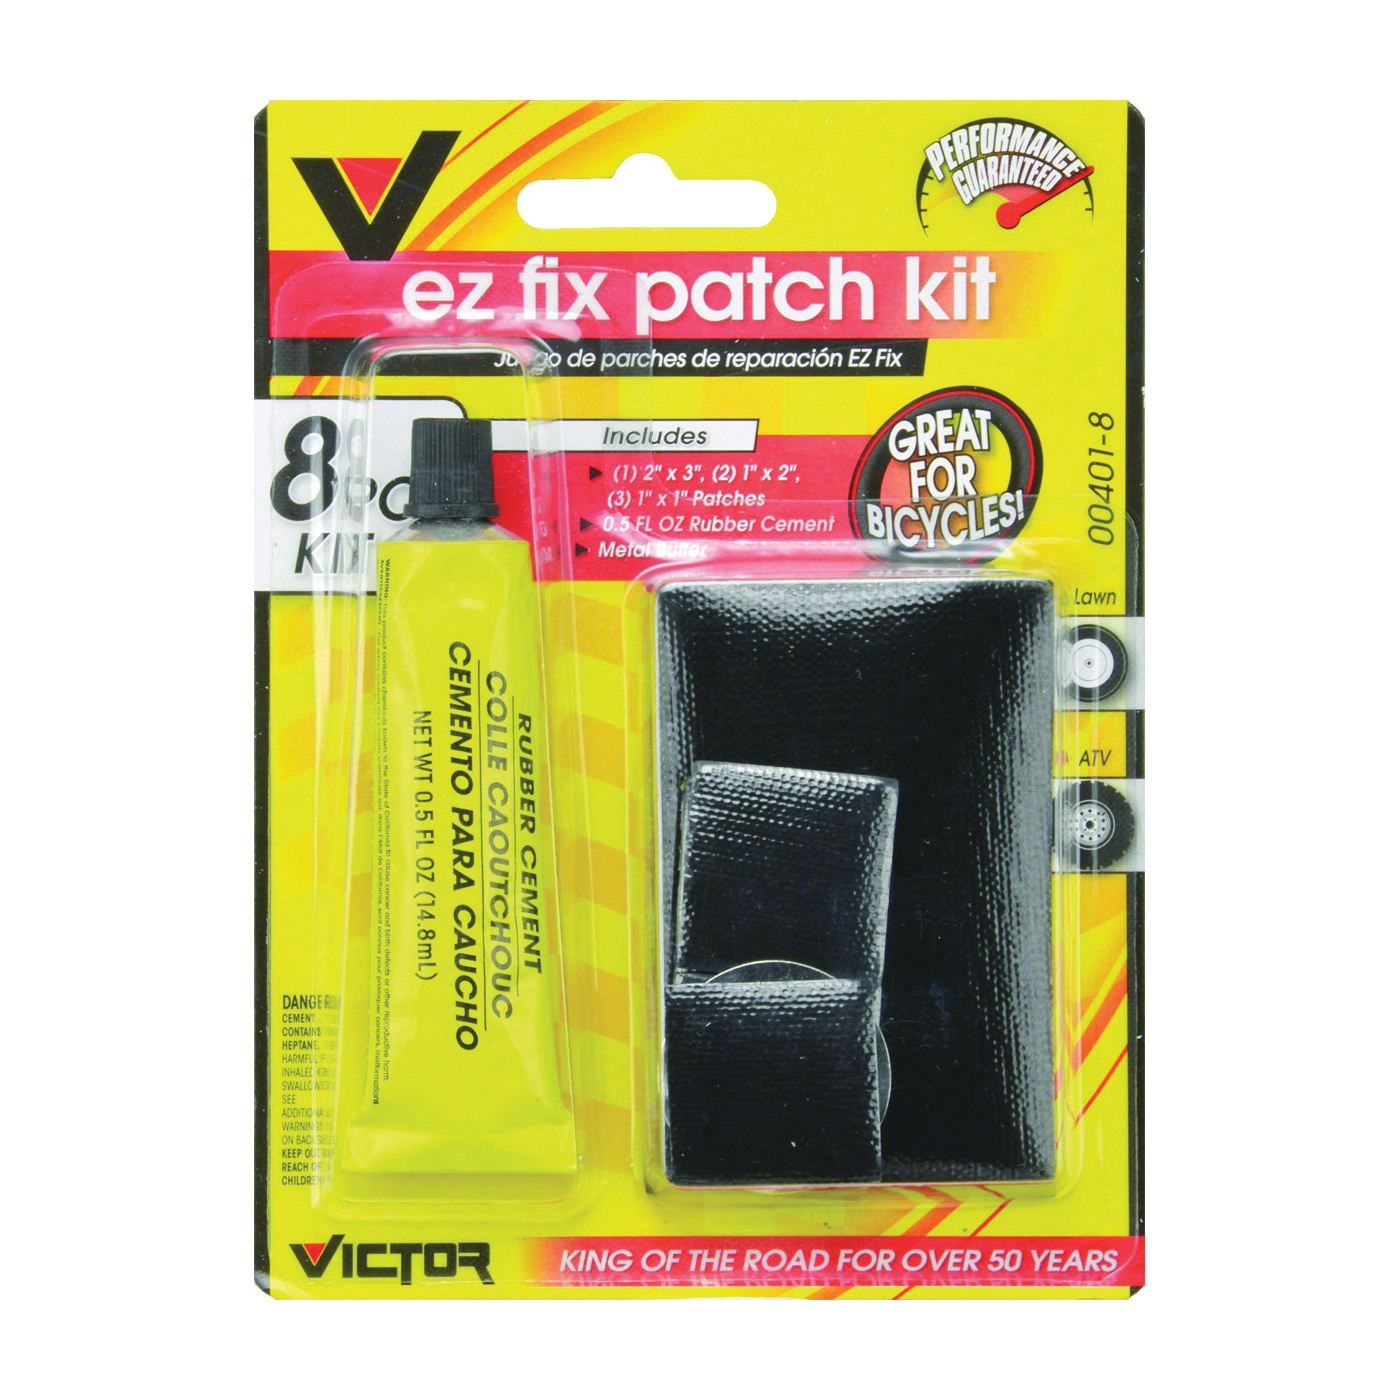 Genuine Victor 22-5-00405-8 Chemical Patch Kit, Metal/Rub